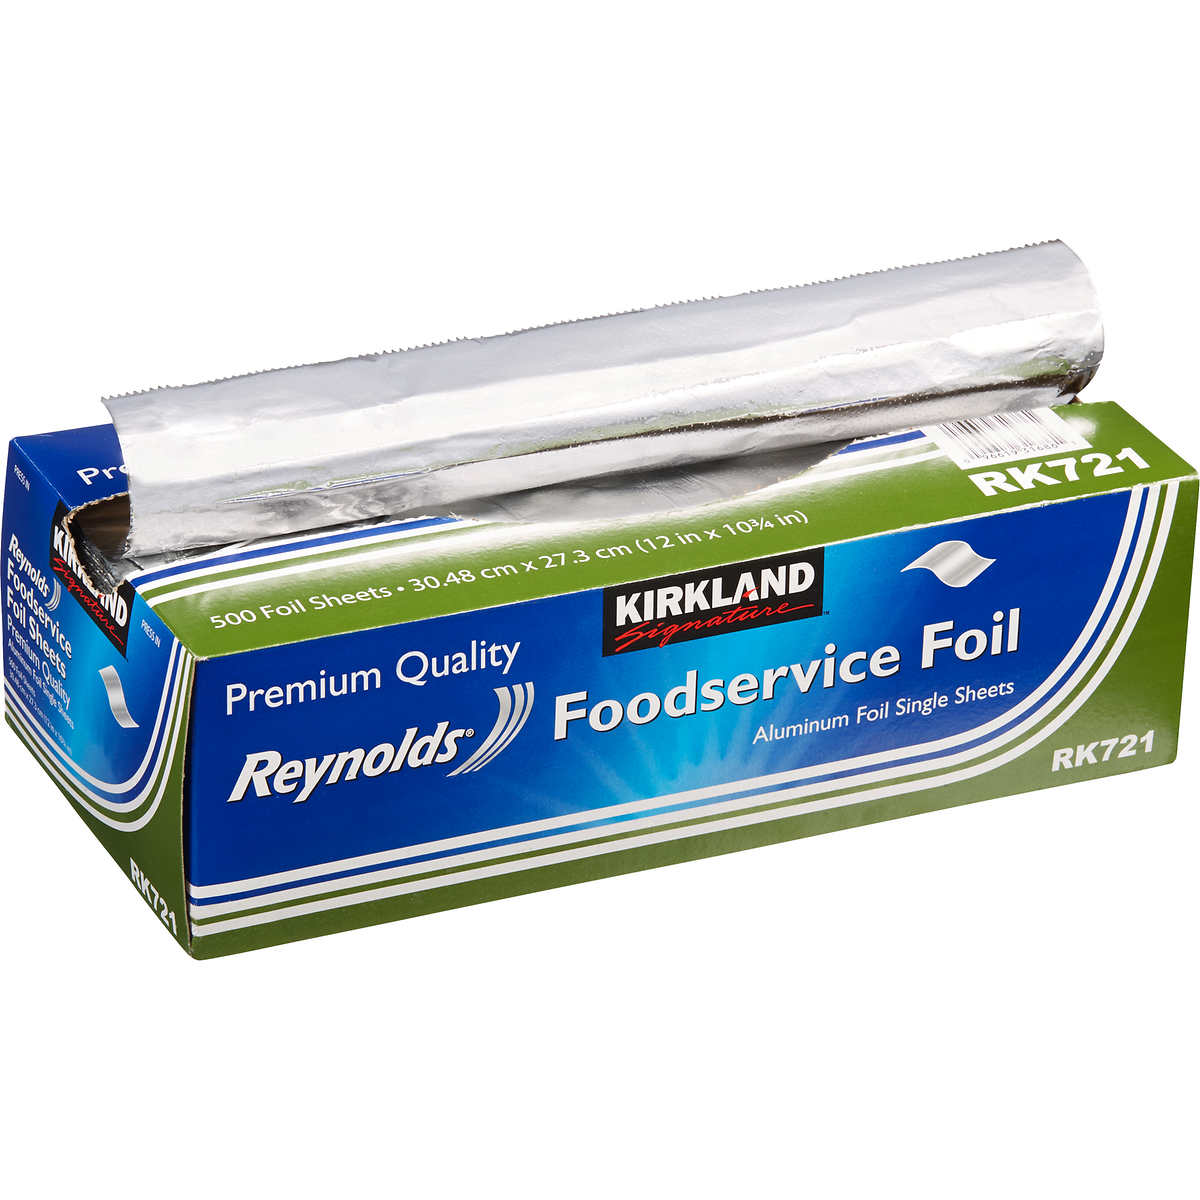 Kirkland Signature Reynolds Foodservice Aluminum Foil, Pre-Cut Single  Sheets, 500-count